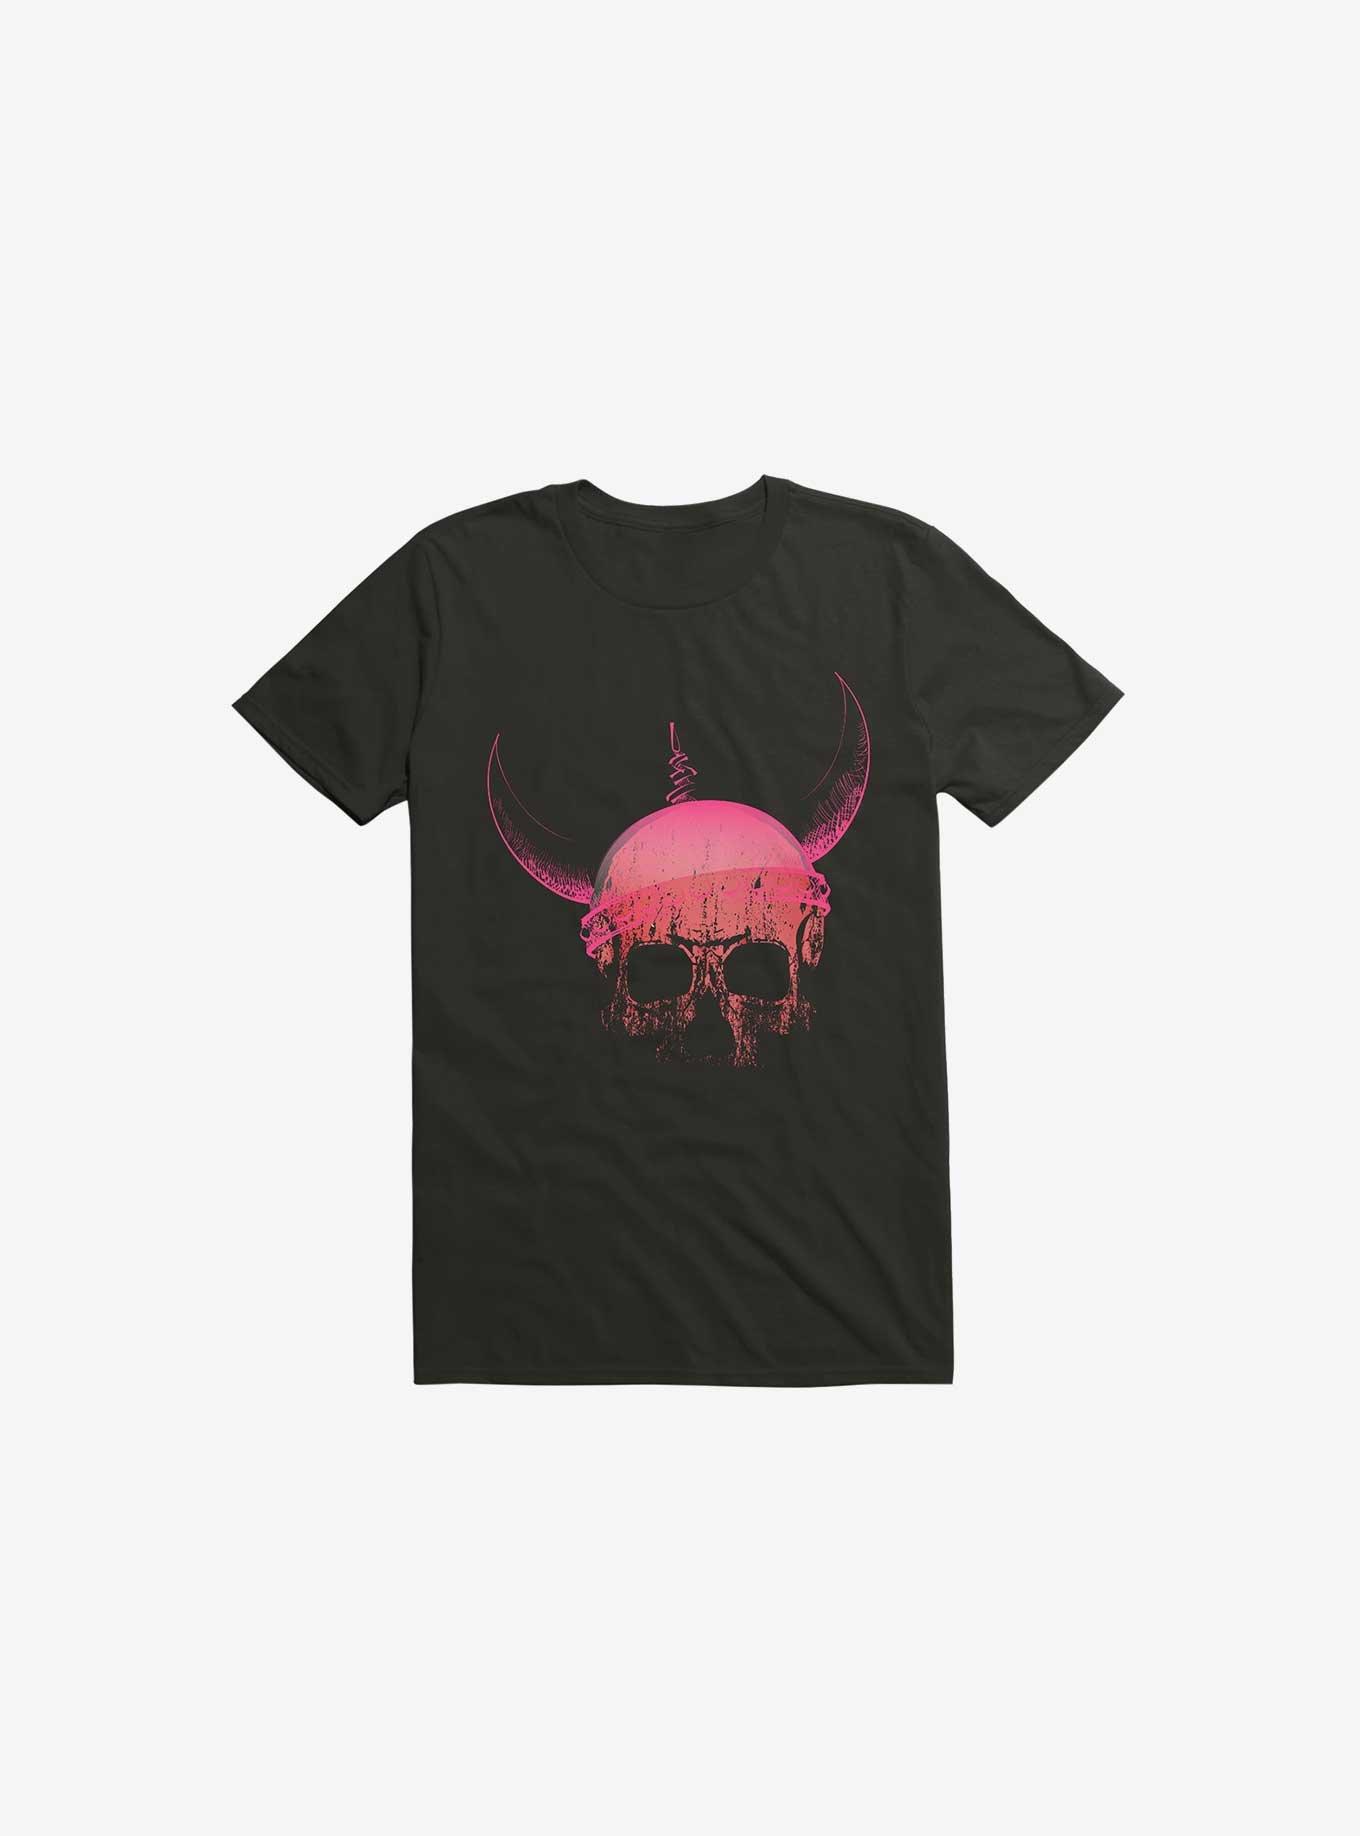 Blood Skull With Viking Helmet T-Shirt